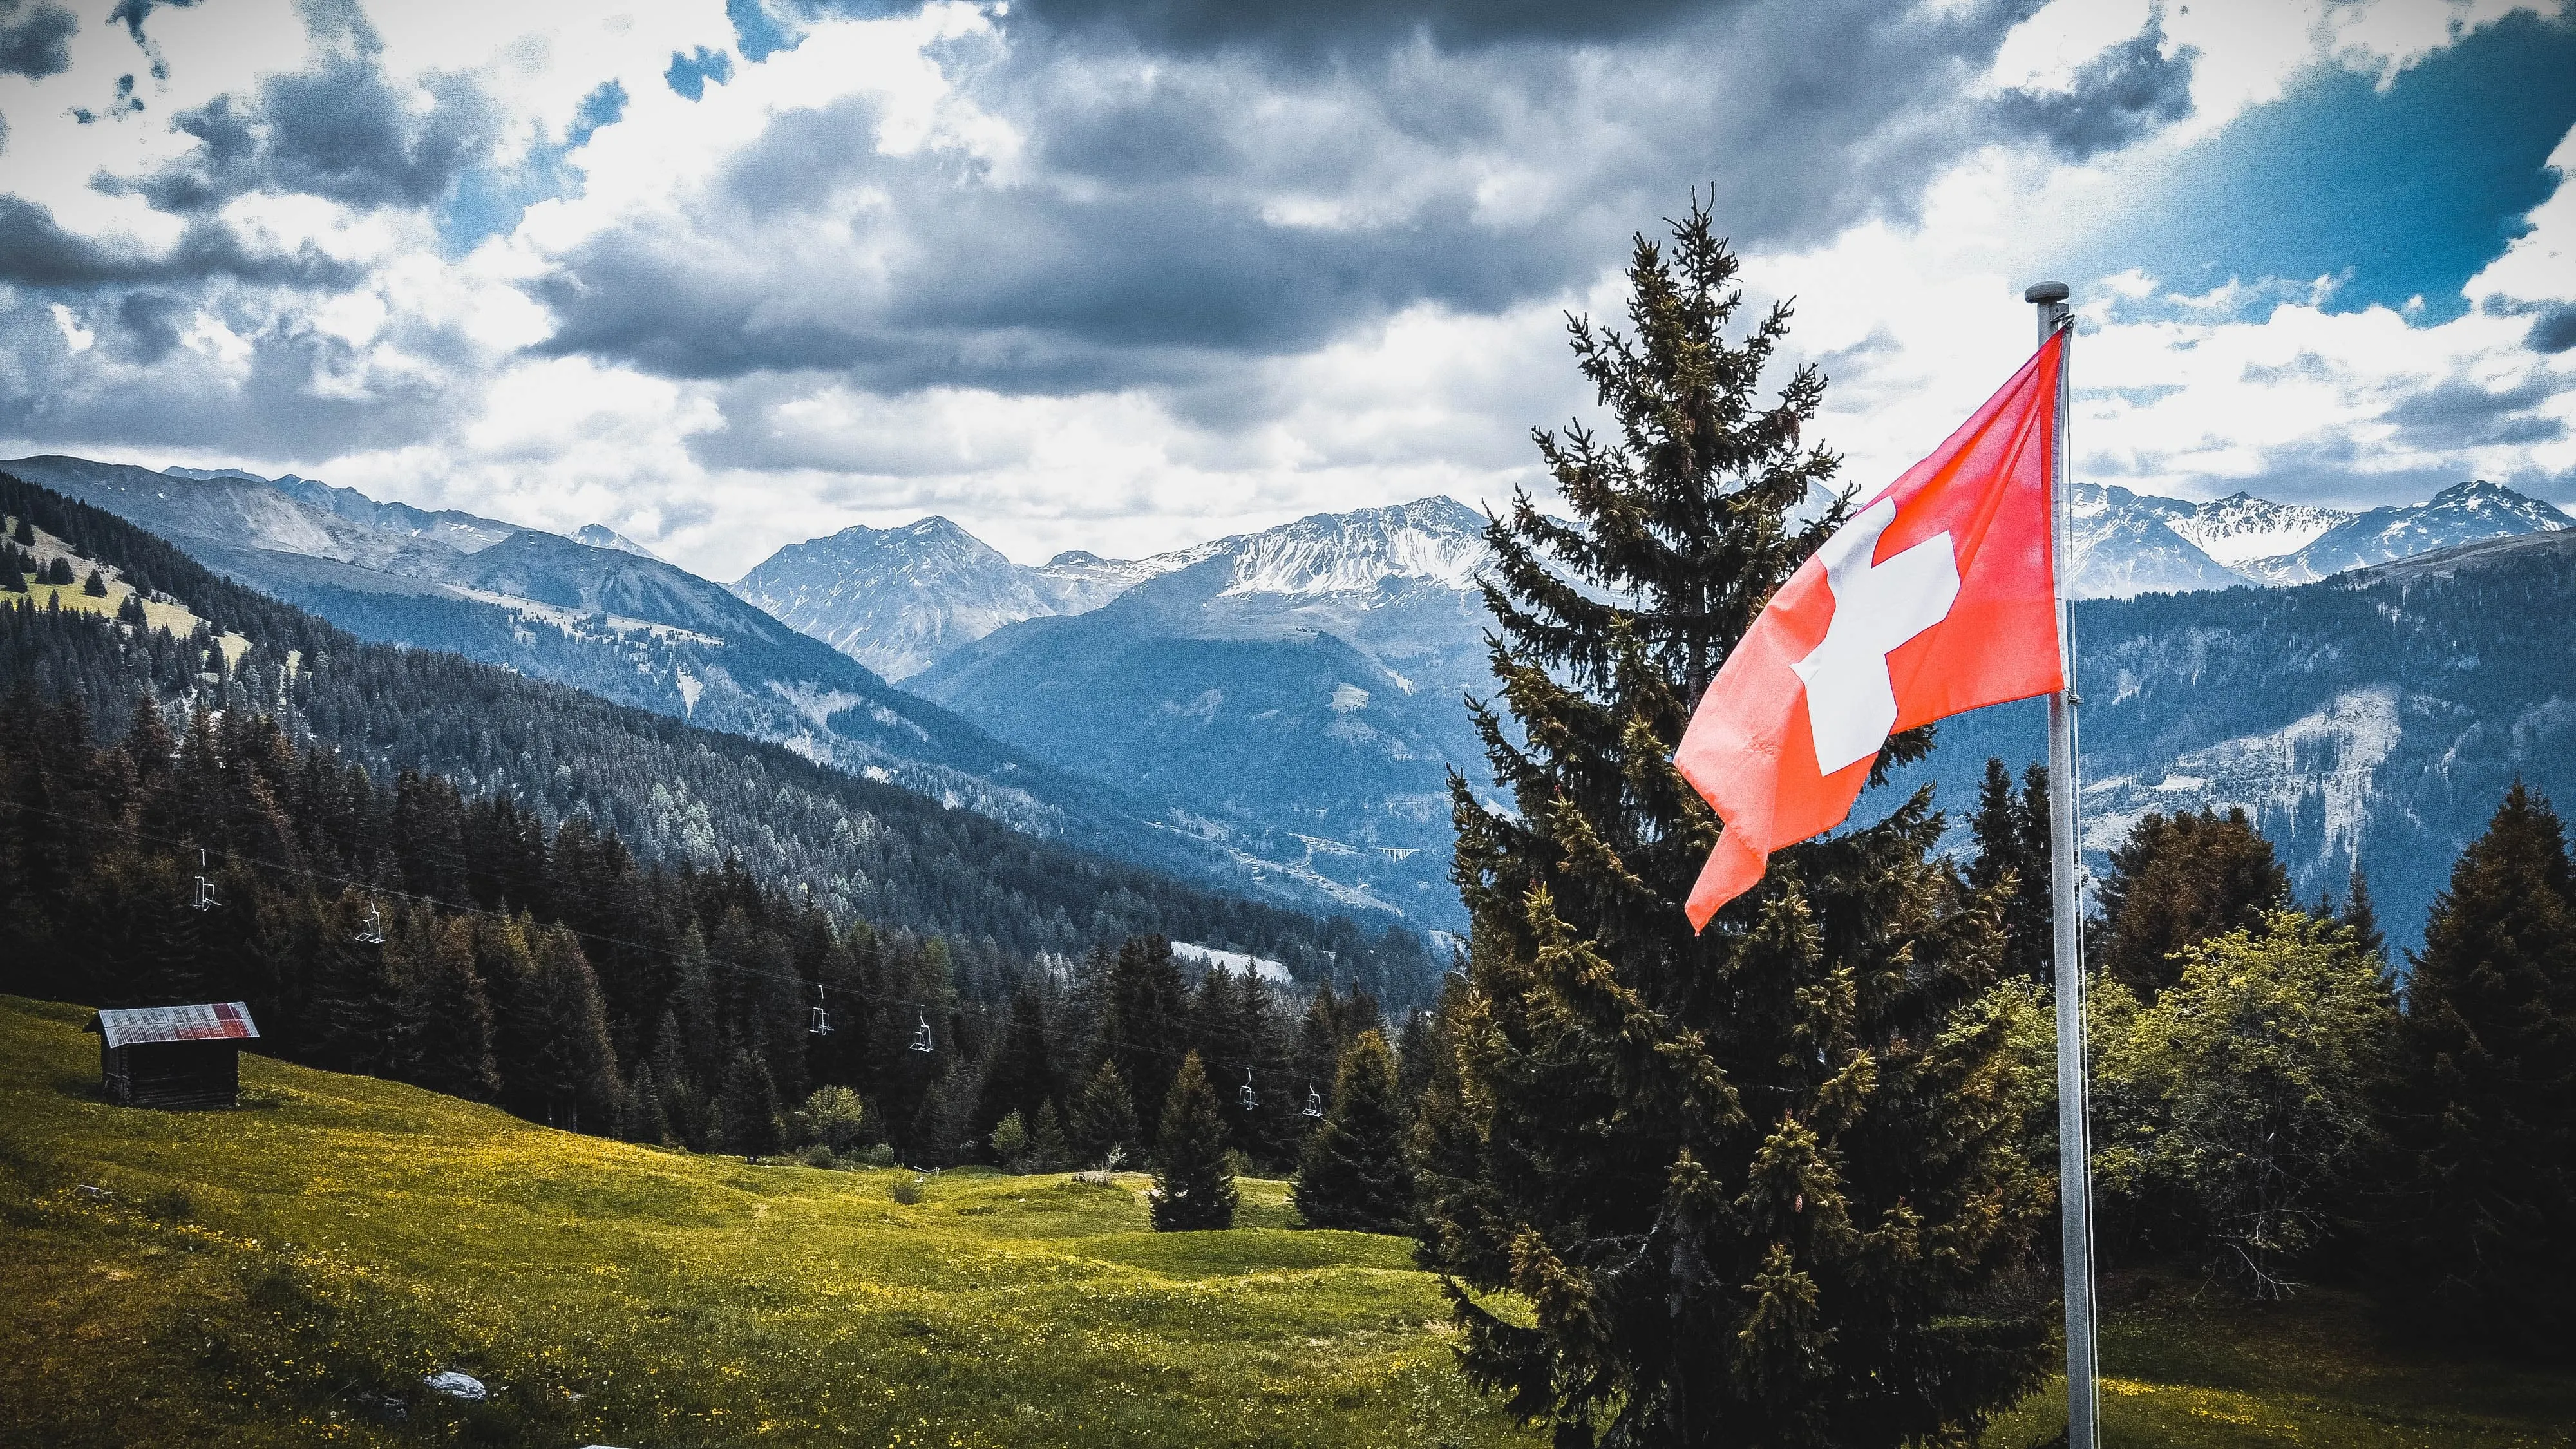 Hut hike Switzerland: The 4 best options